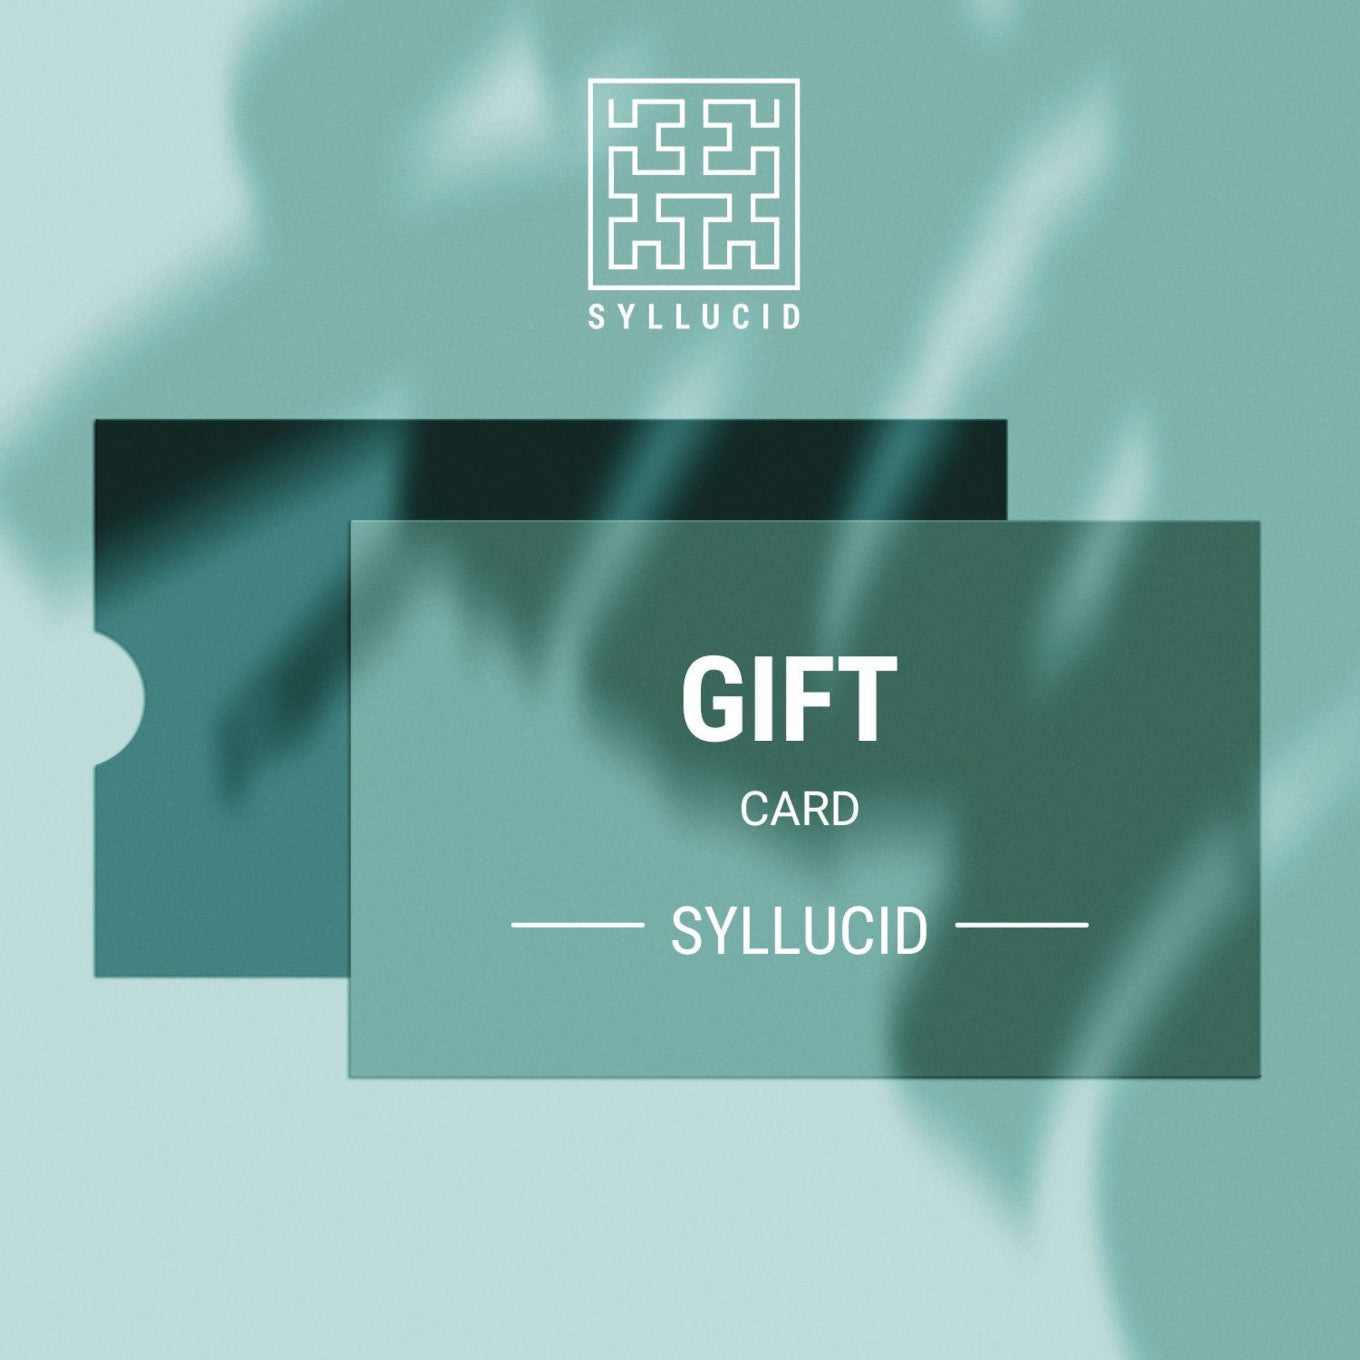 Syllucid Gift Card